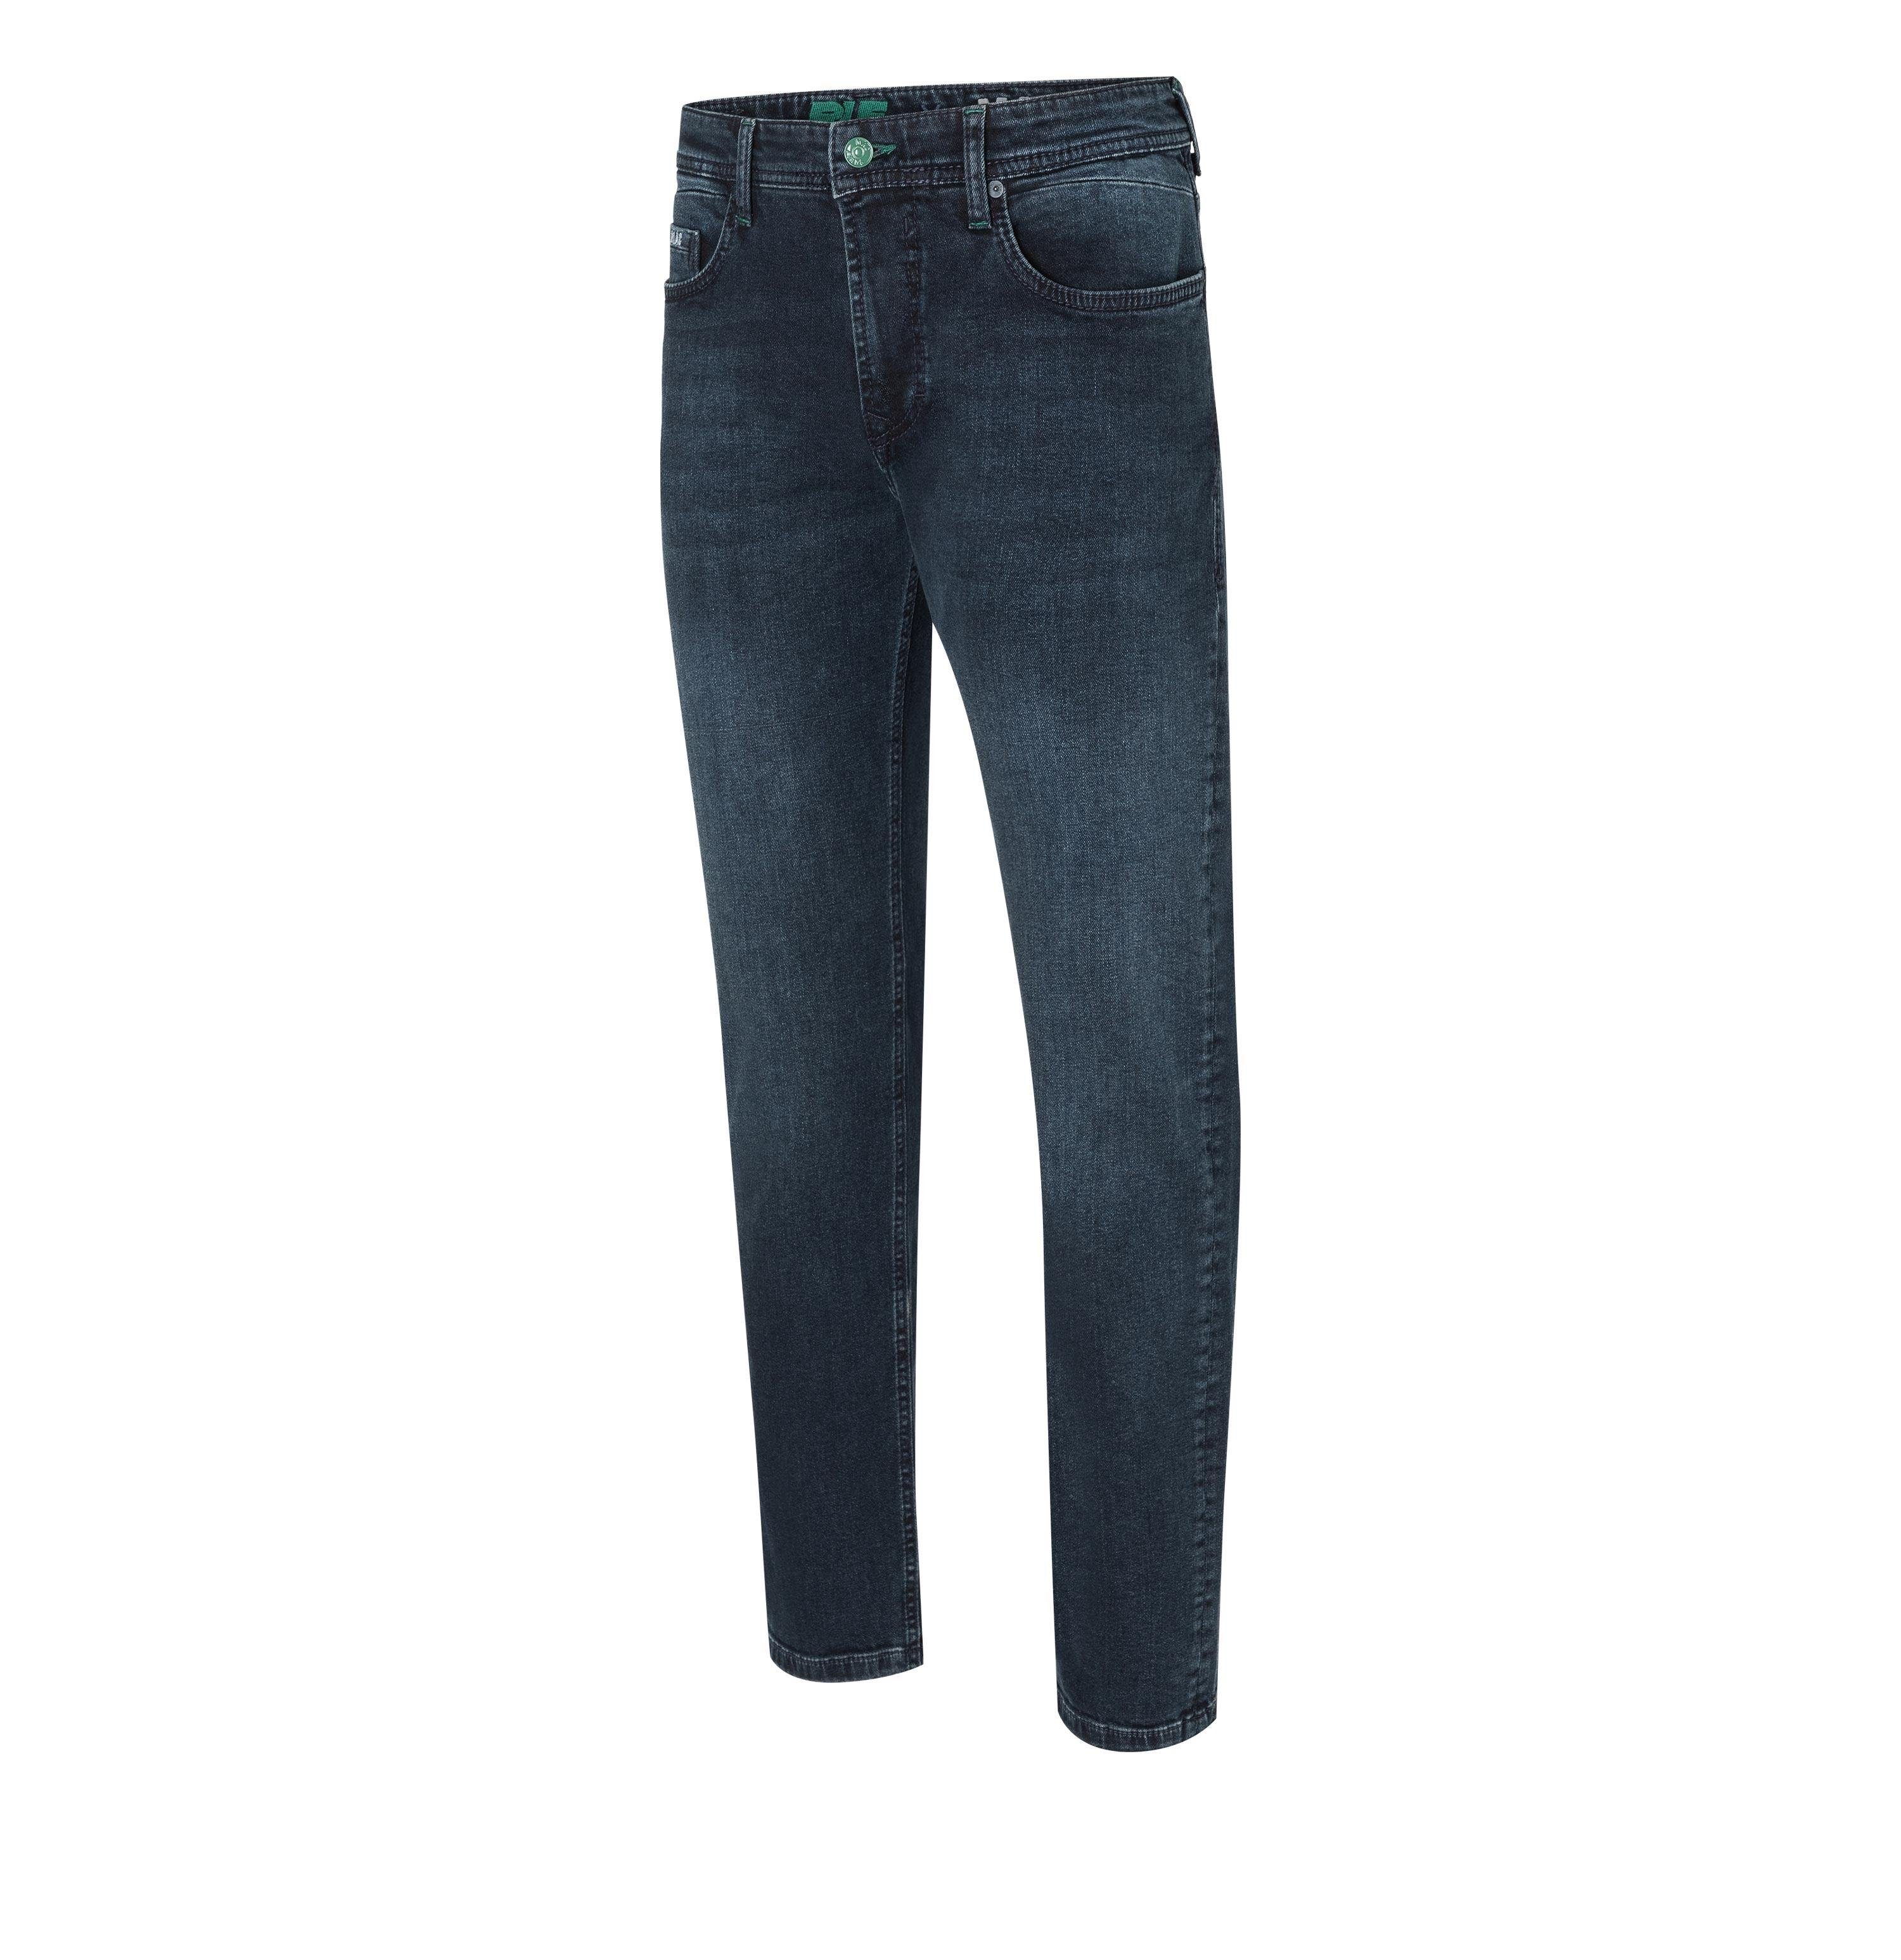 MAC 5-Pocket-Jeans MAC BEN blue H774 0382-05-0978 black